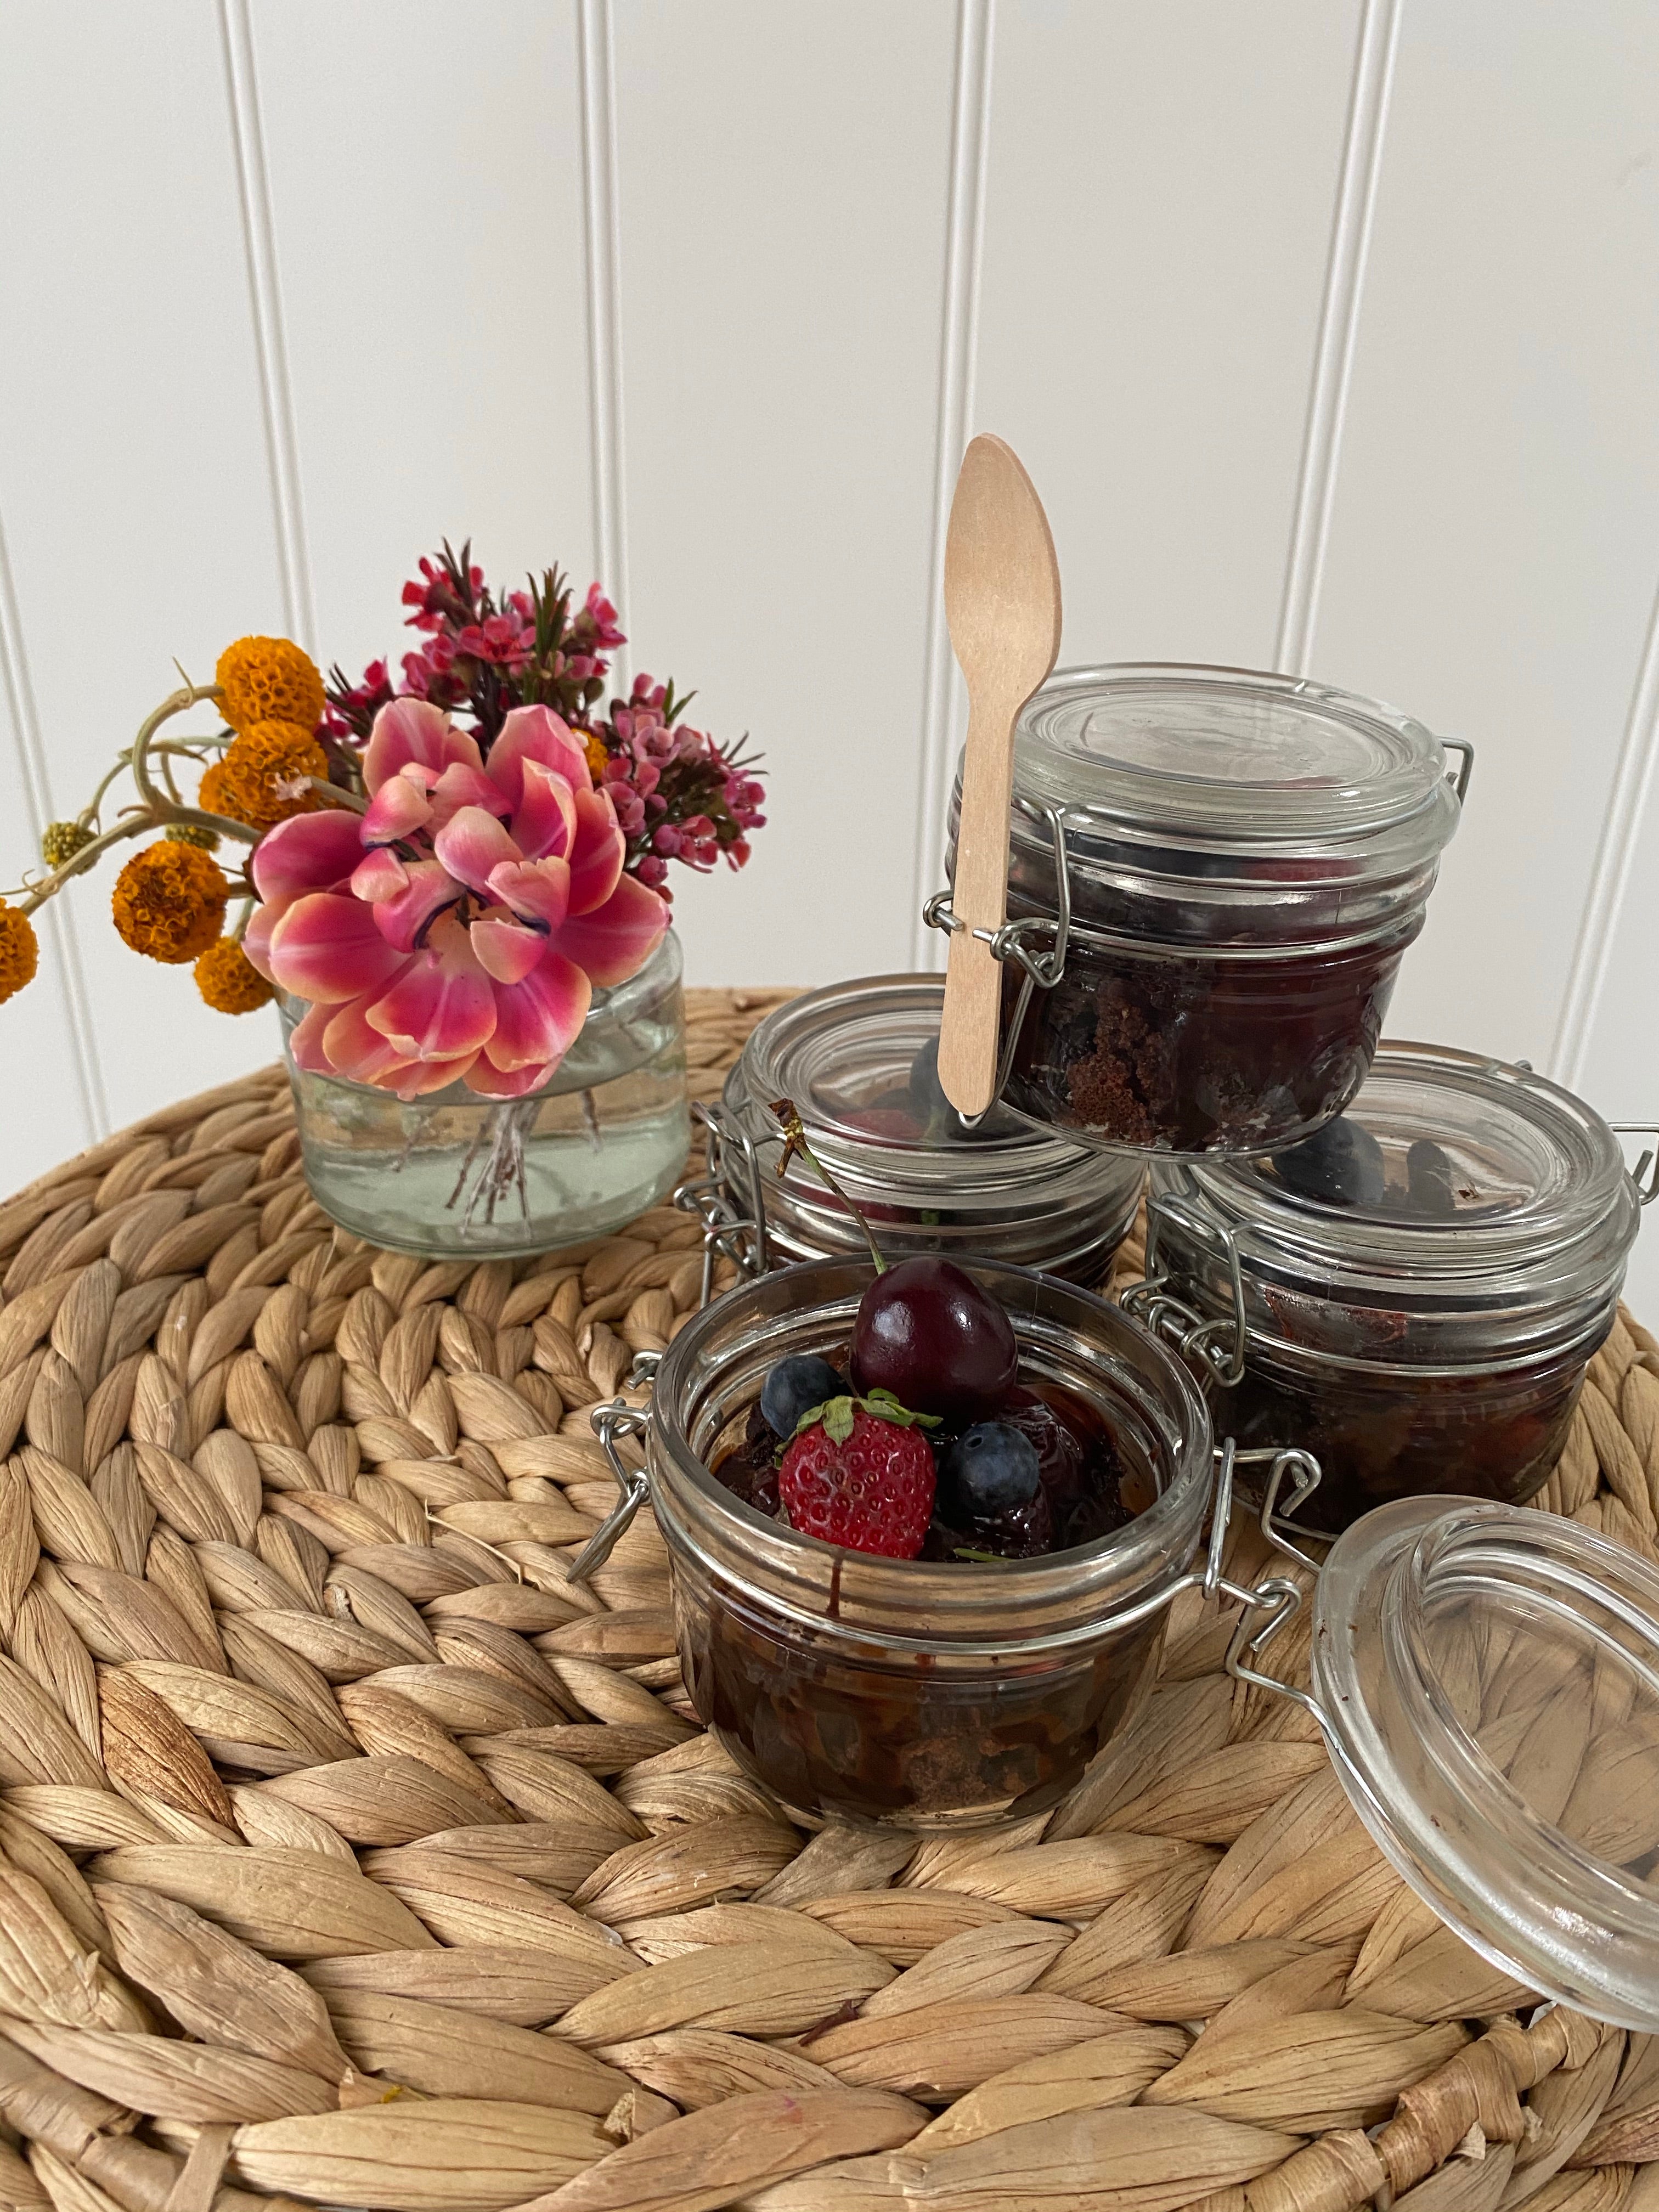 Mix berry brownie dessert jars